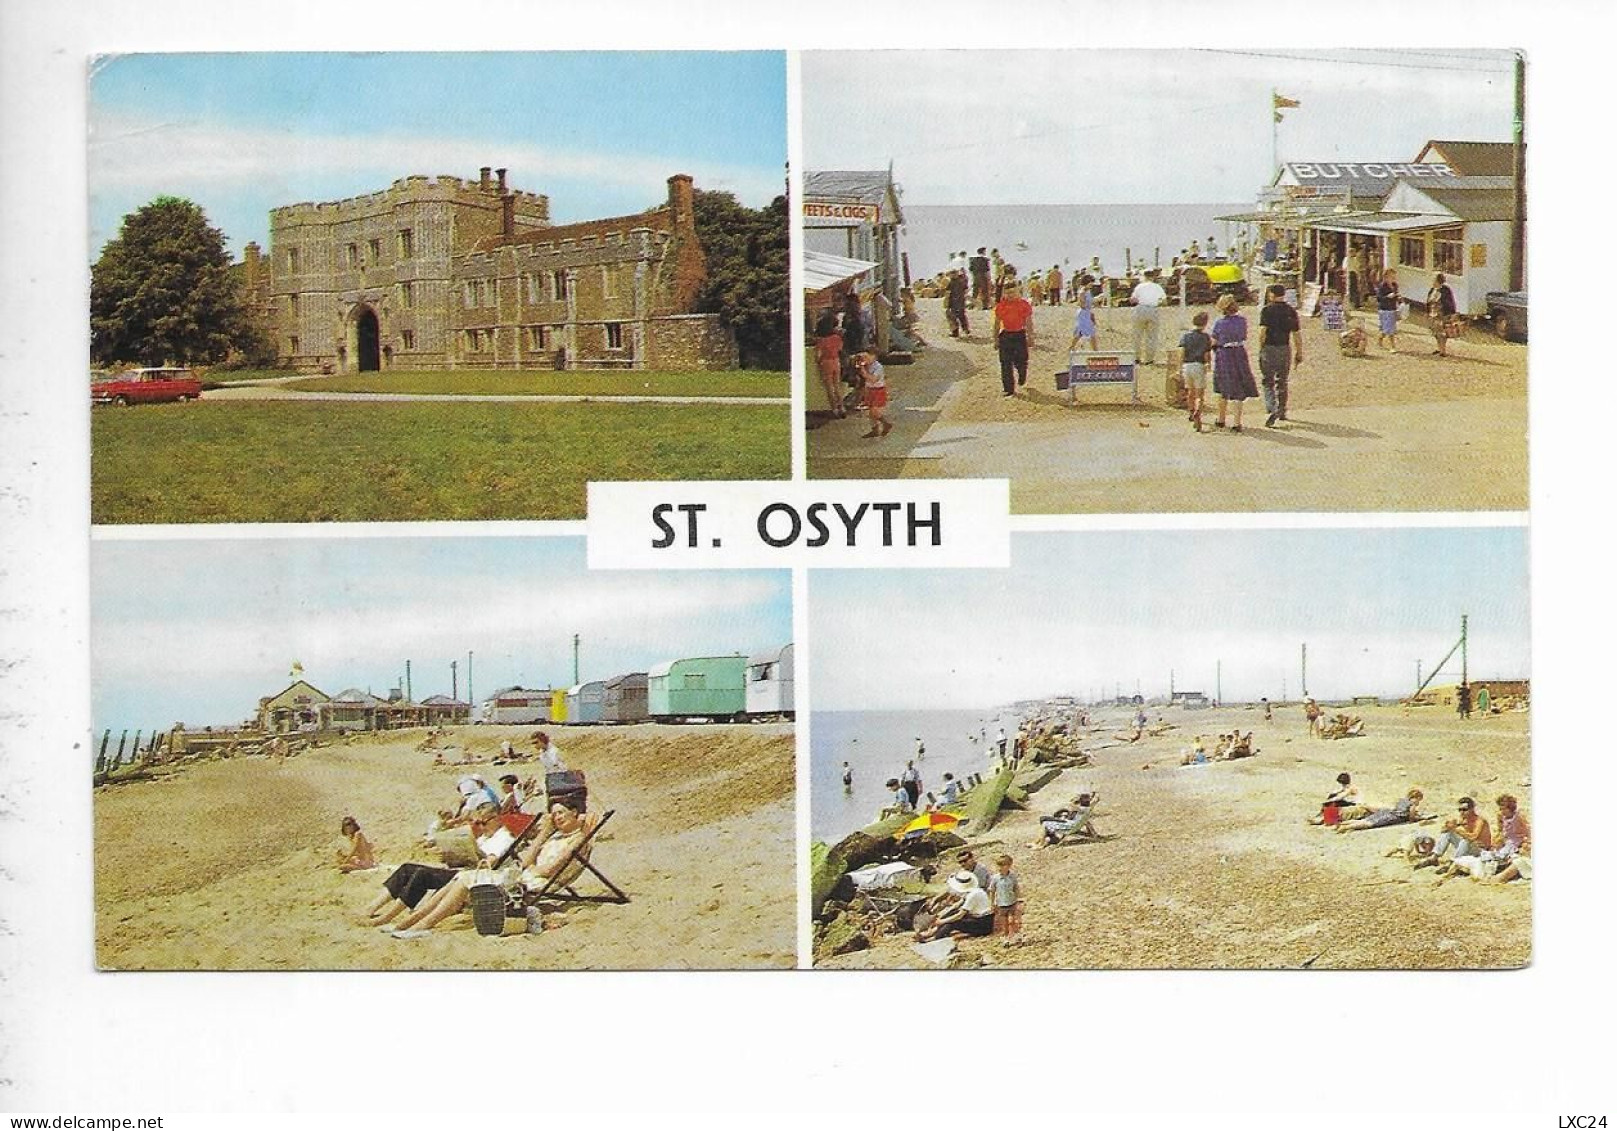 ST. OSYTH. - Colchester